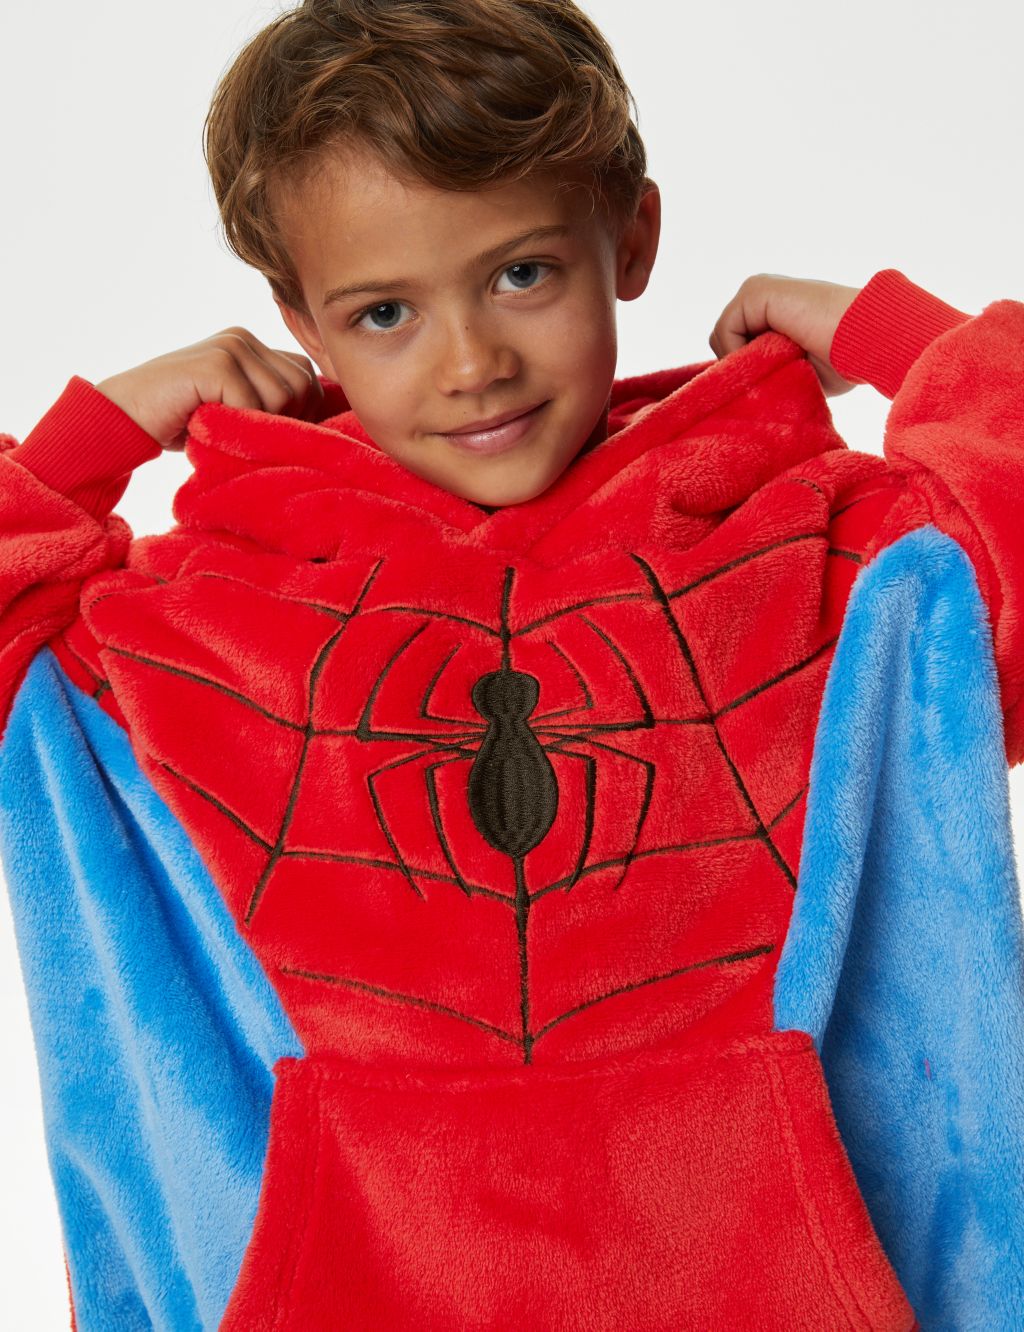 Spiderman Pyjamas Kids Toddler Boys 2 3 4 5 6 7 8 9 10 11 12 Years